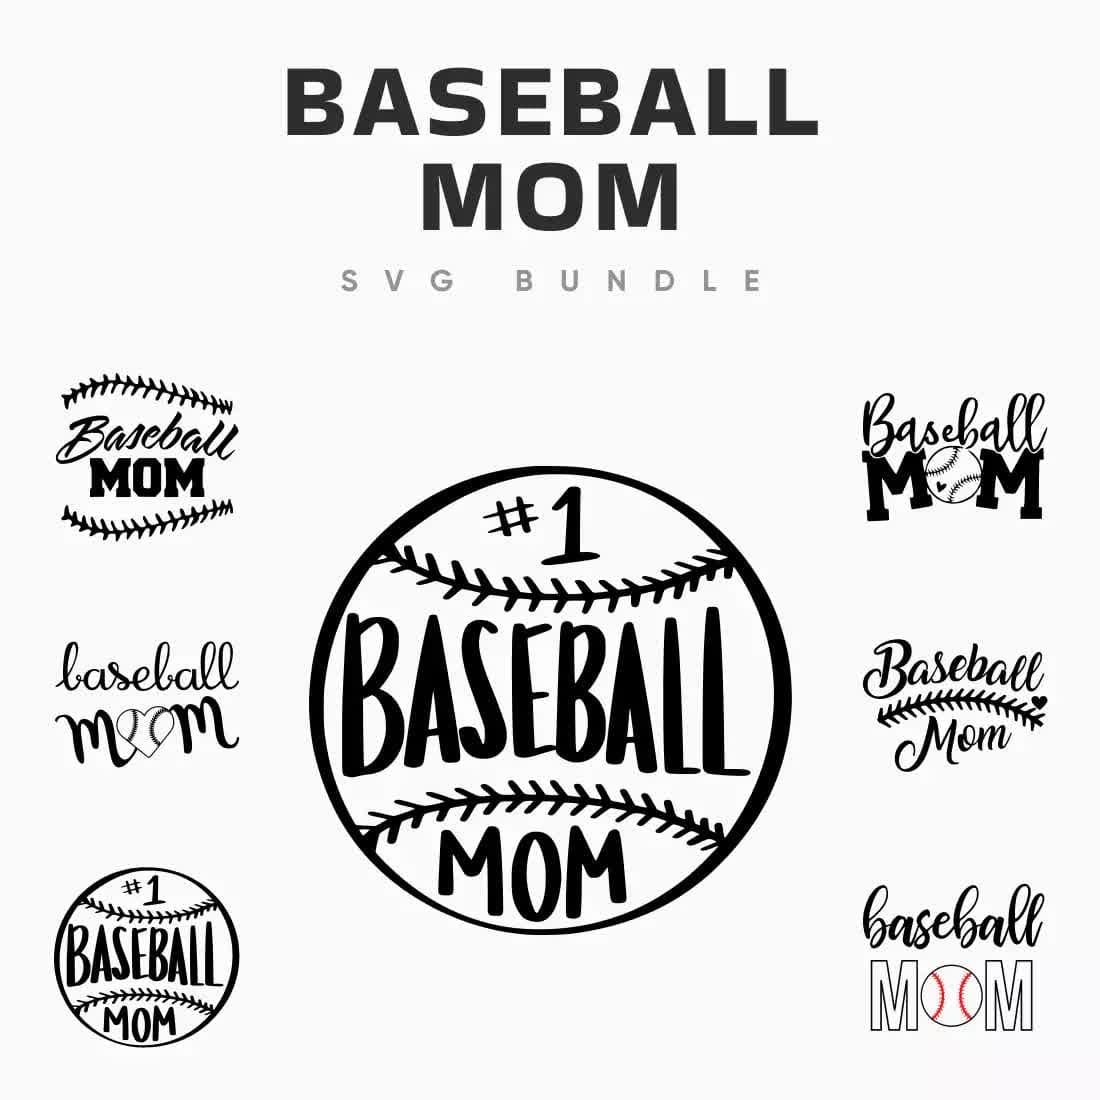 Baseball Mom SVG Bundle Preview 3.